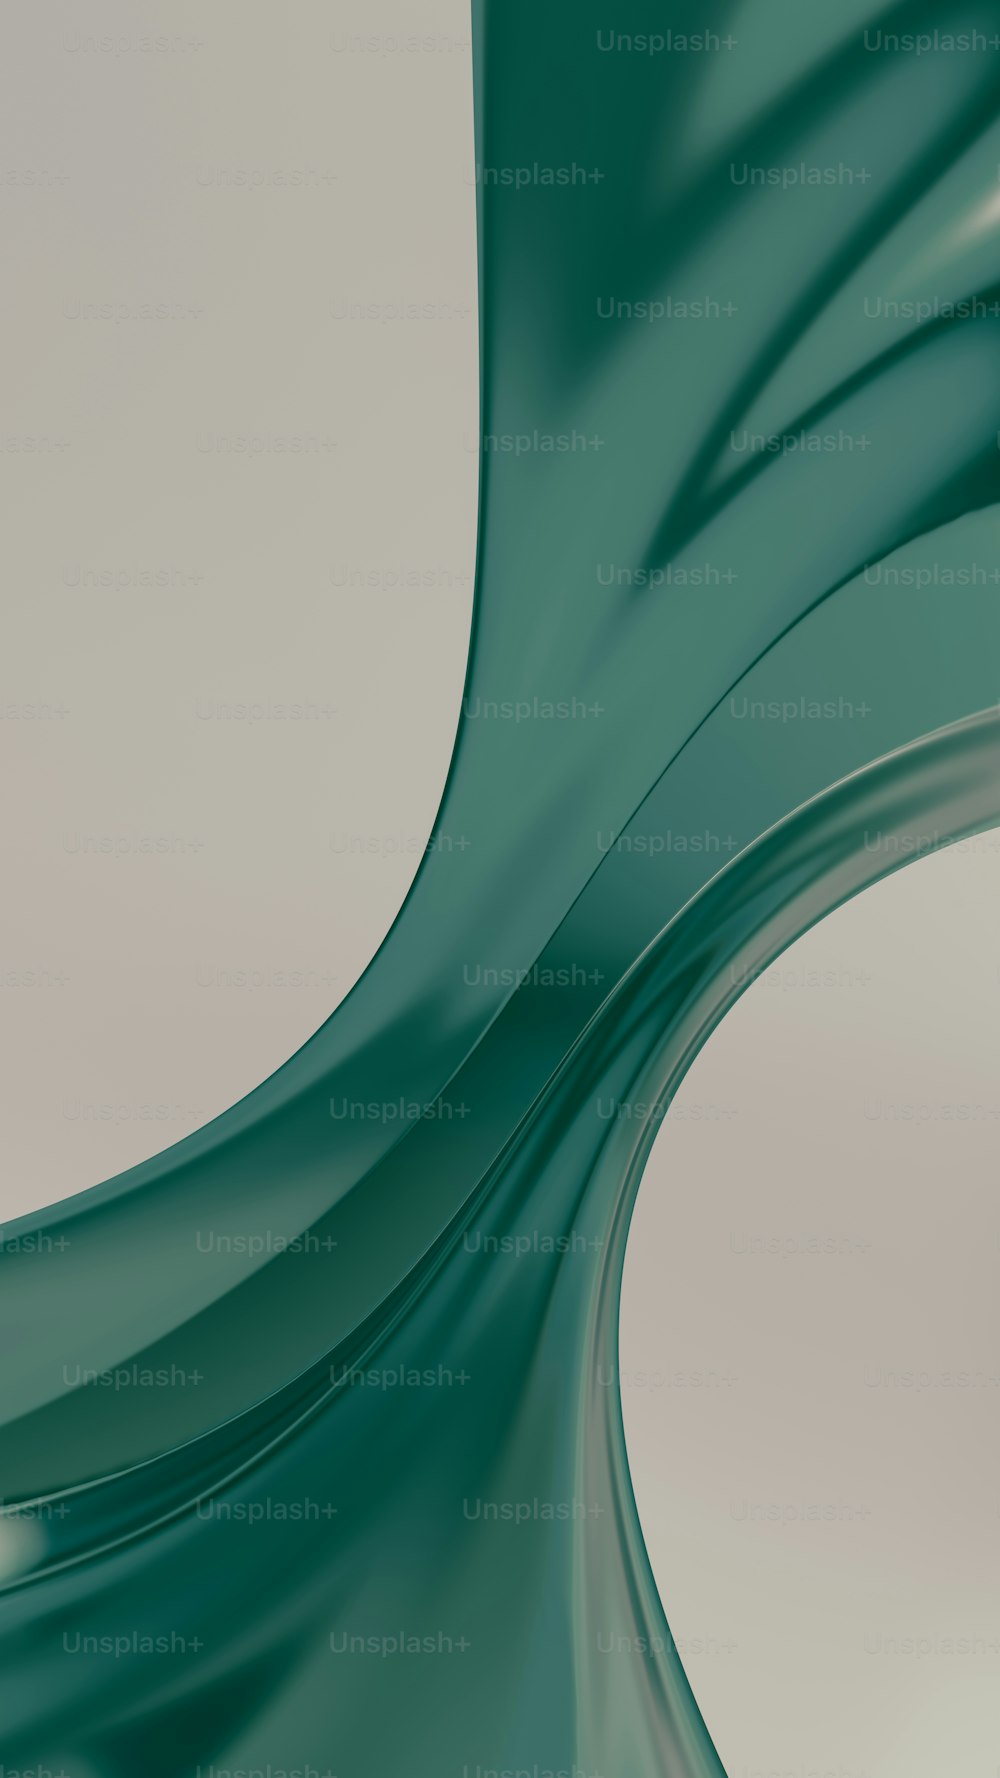 Una foto astratta di un'onda verde